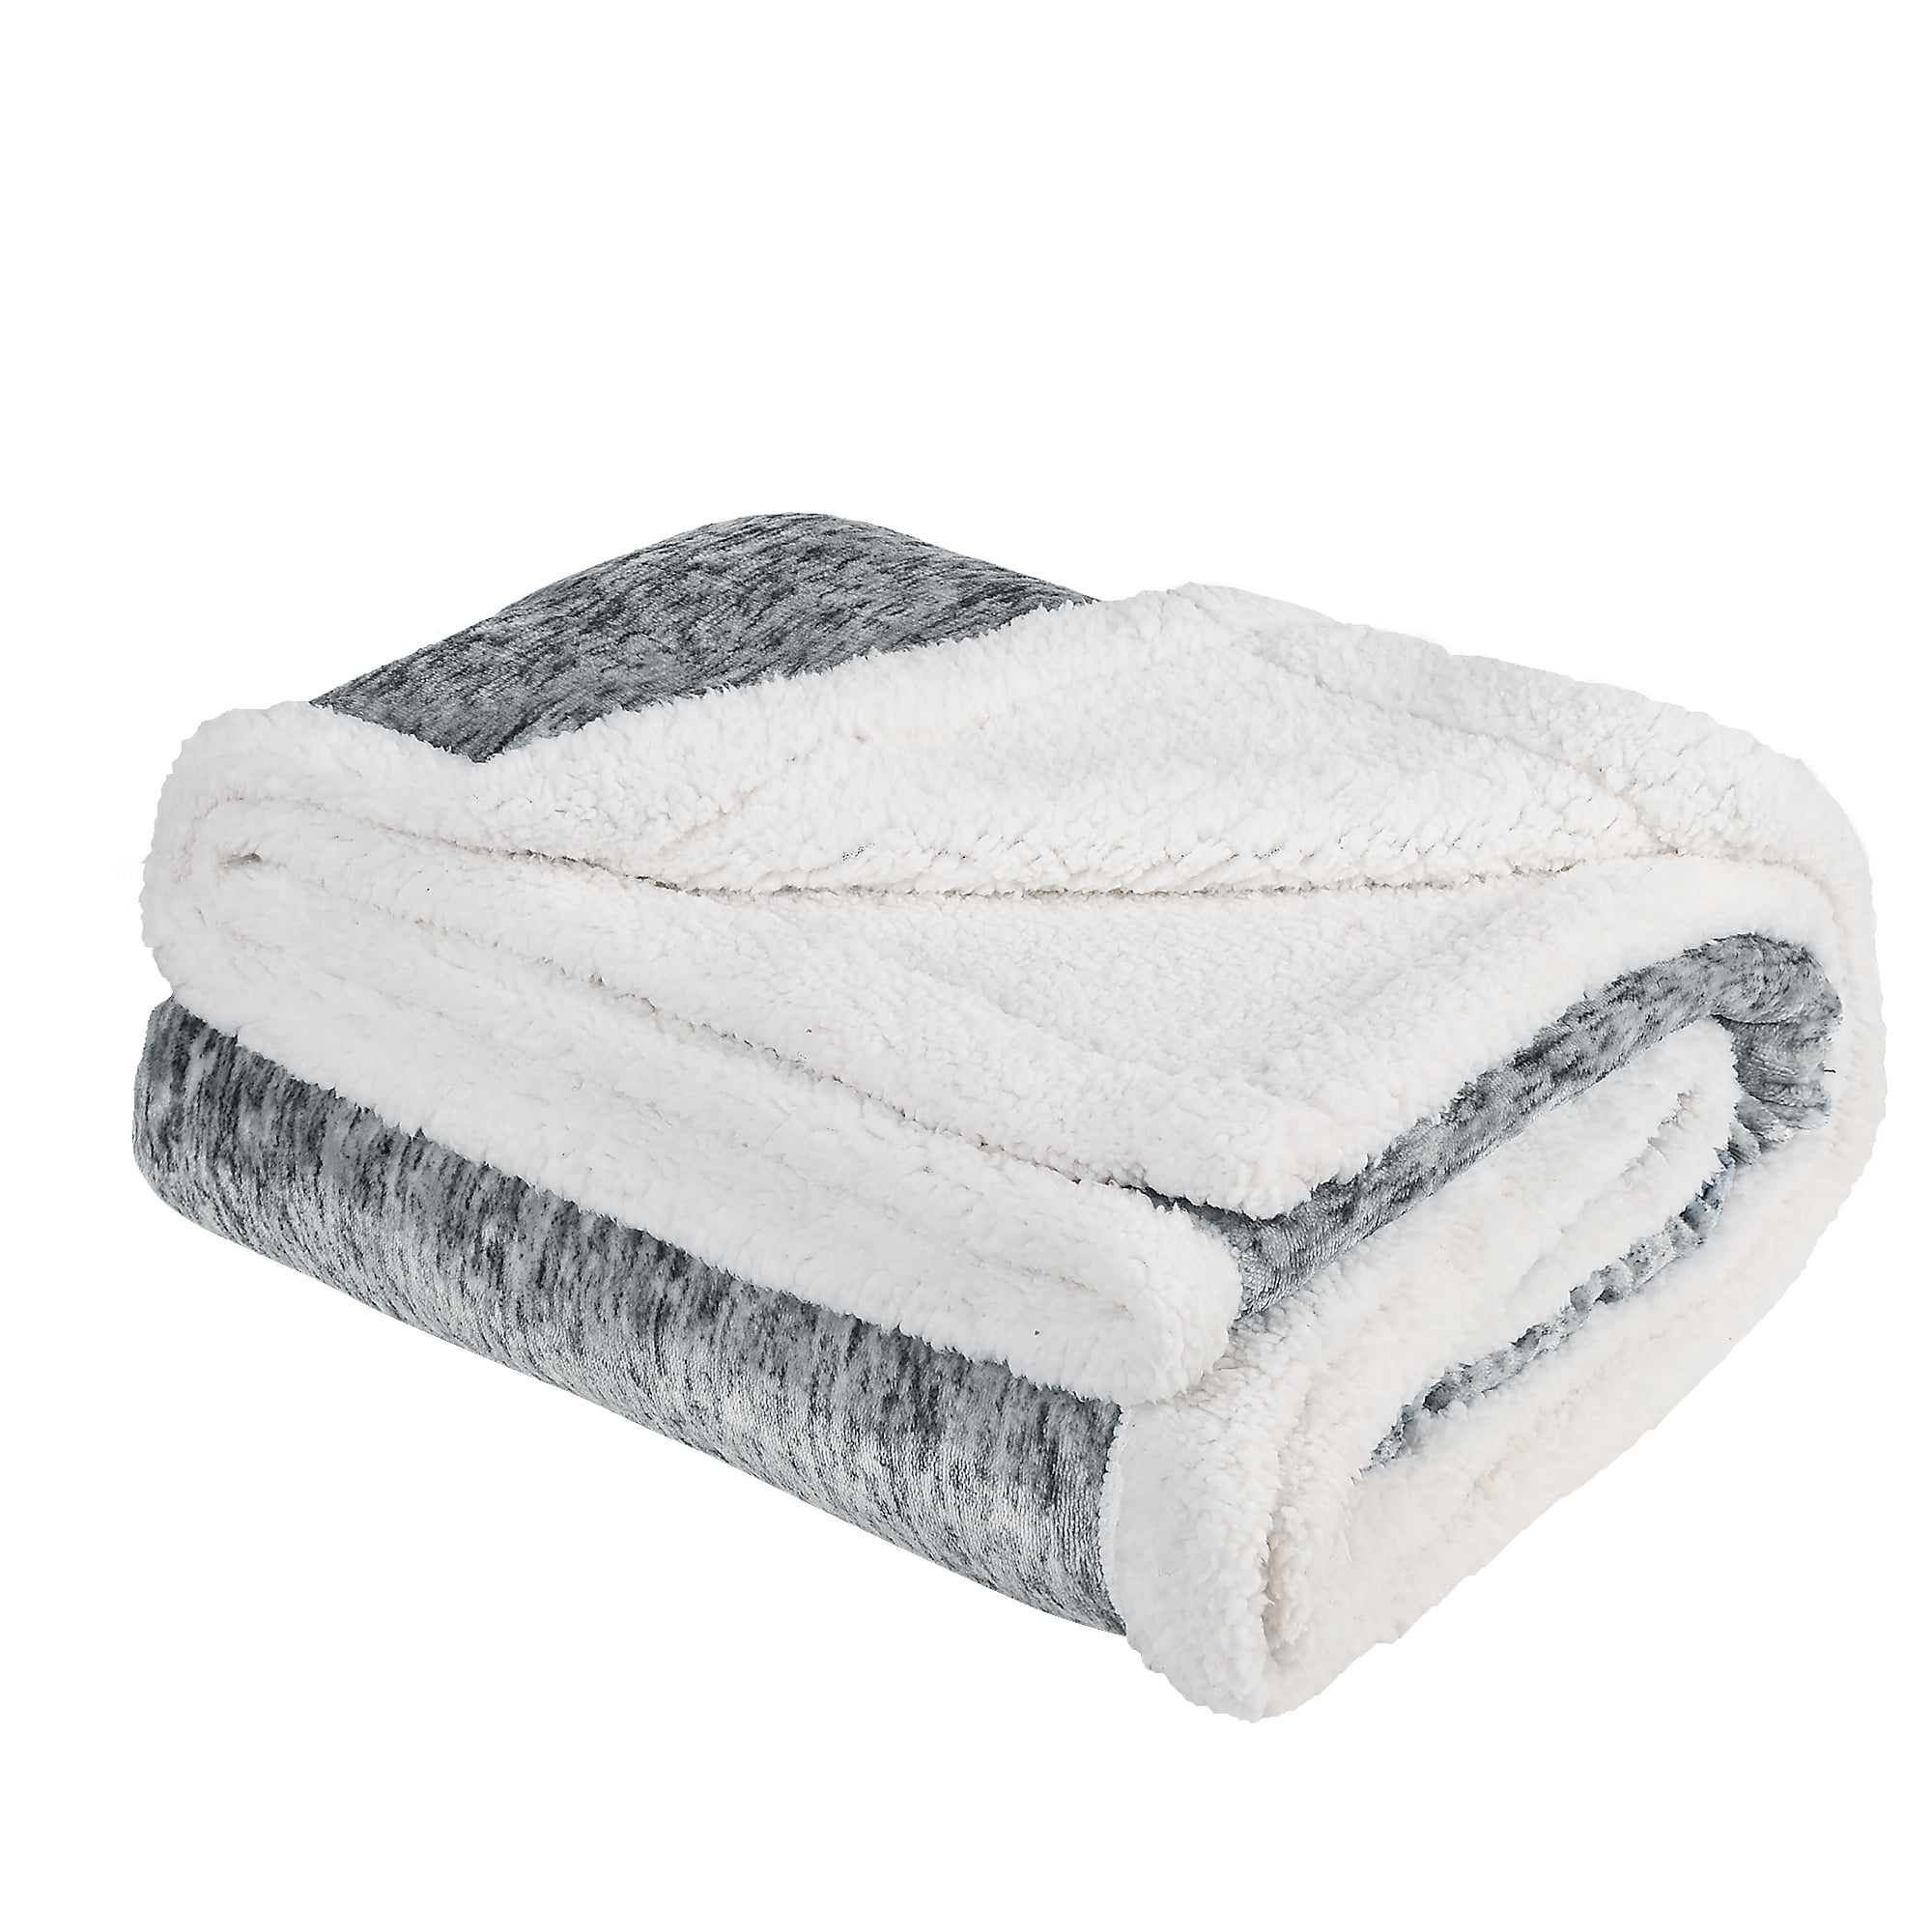  Kids Sherpa Fleece Blanket Throw Size Black White Throw Blanket  Thicken Sherpa Blankets Super Soft Blanket for Boys Girls 50 x 60 Inches :  Home & Kitchen